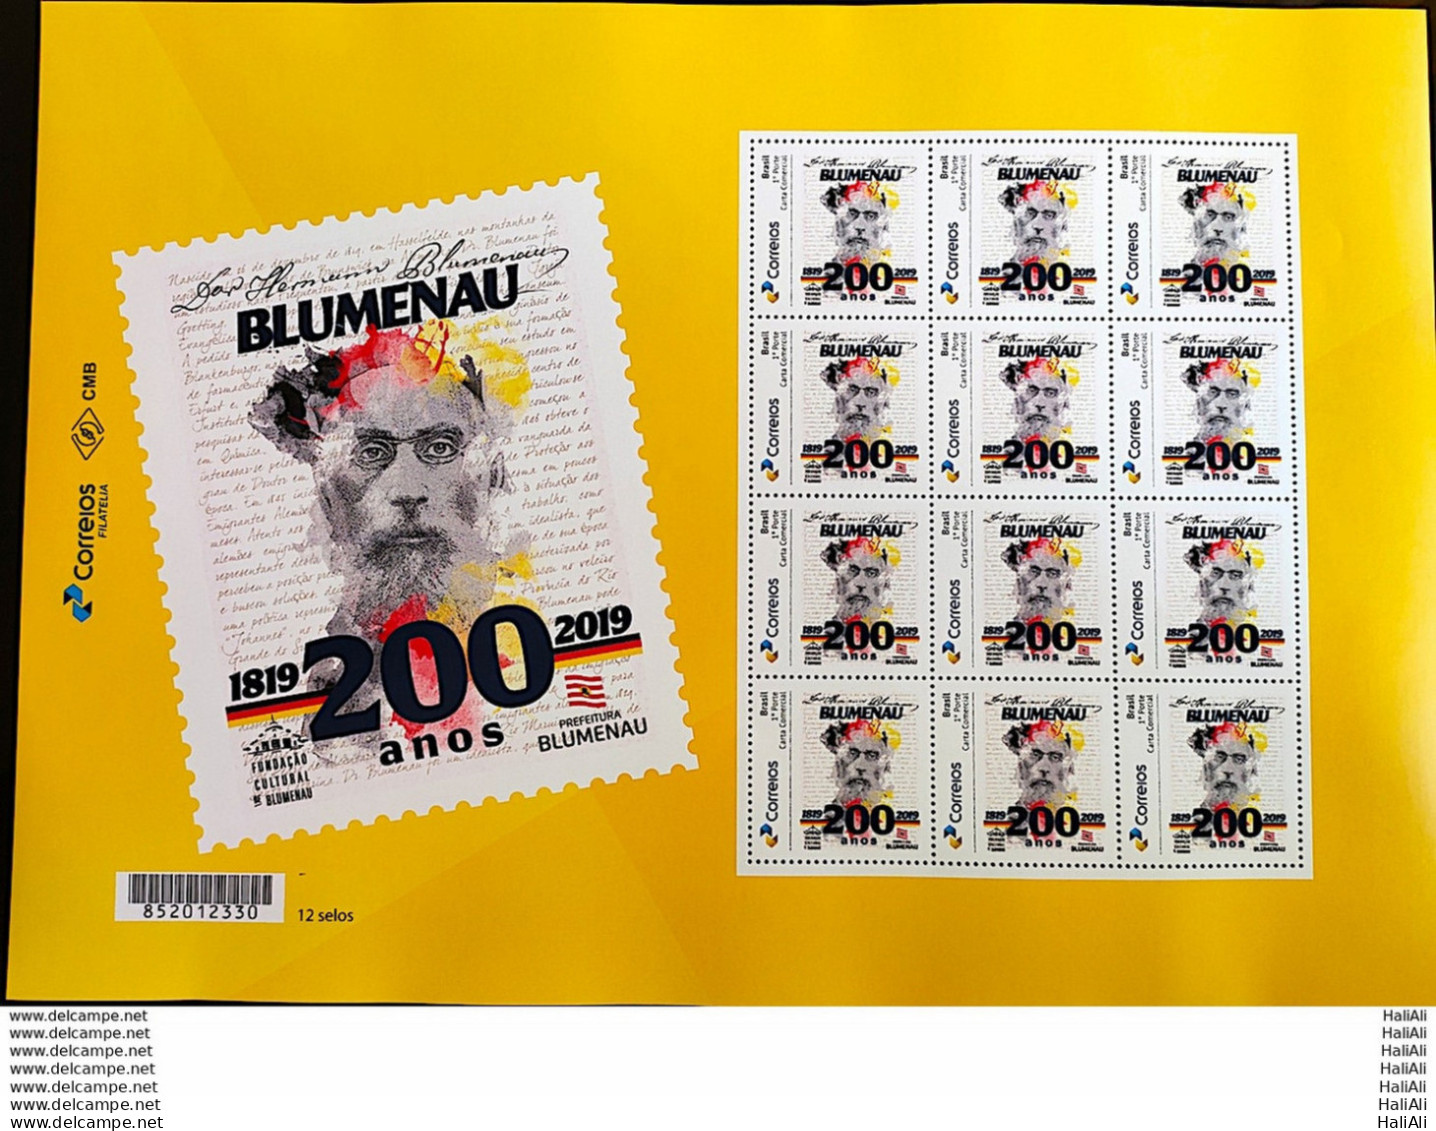 PB 134 Brazil Personalized Stamp Hermann Blumenau 2019 Sheet G - Personalized Stamps